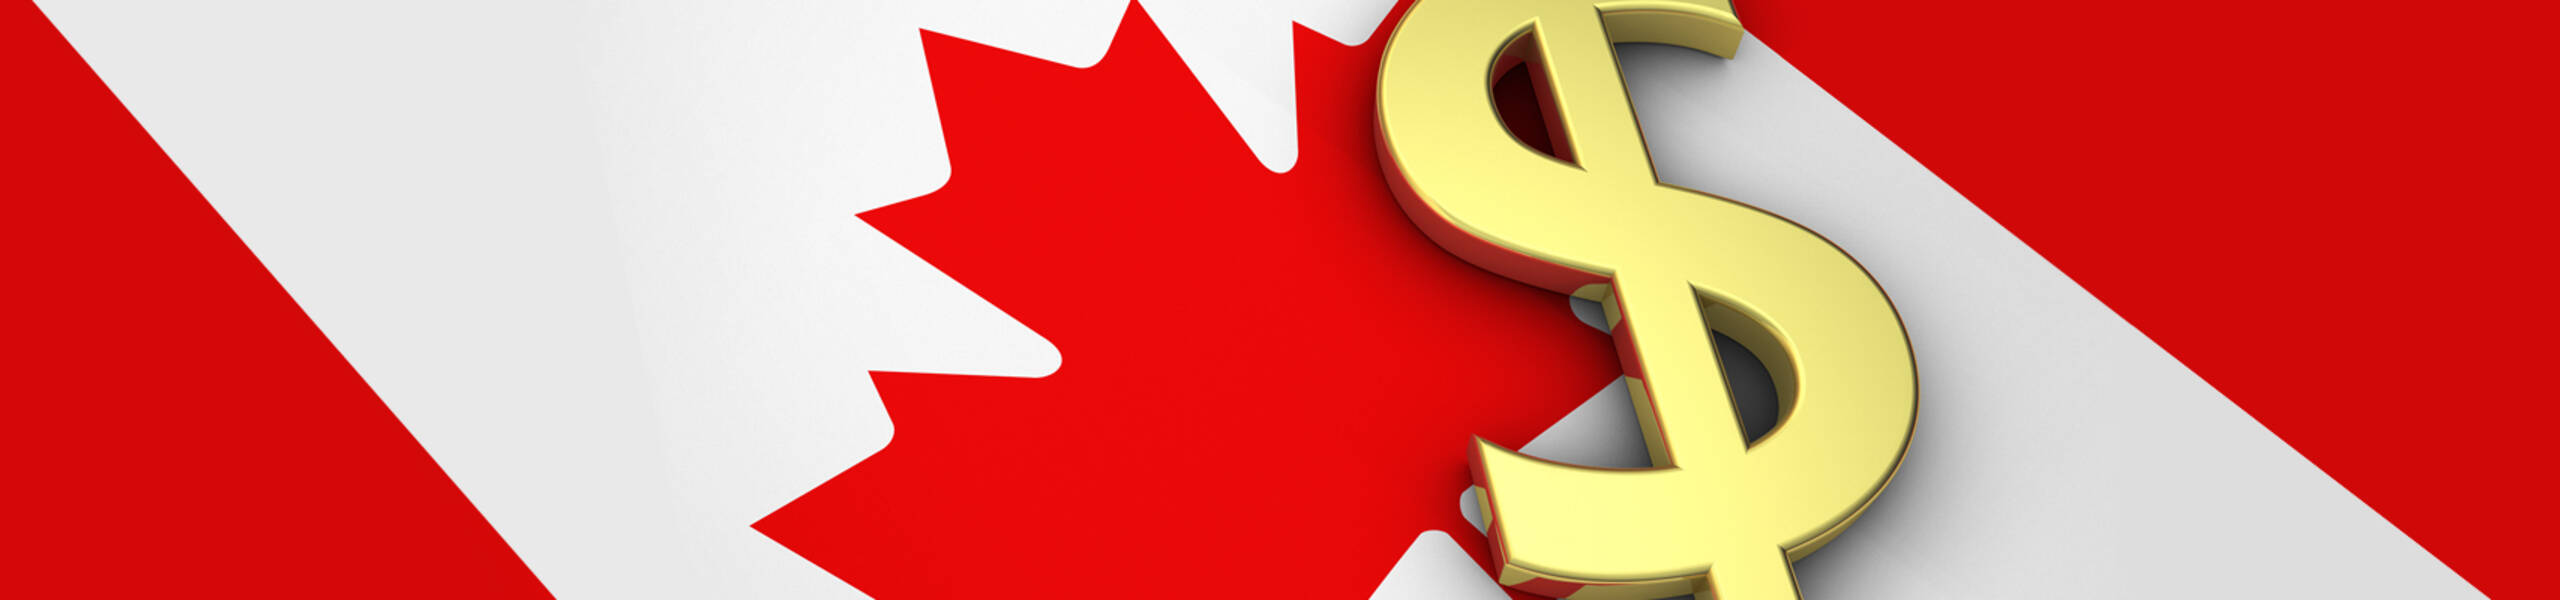 Trade Balance และ Ivey PMI ของแคนาดา CAD อาจจะผันผวนเล็กน้อย